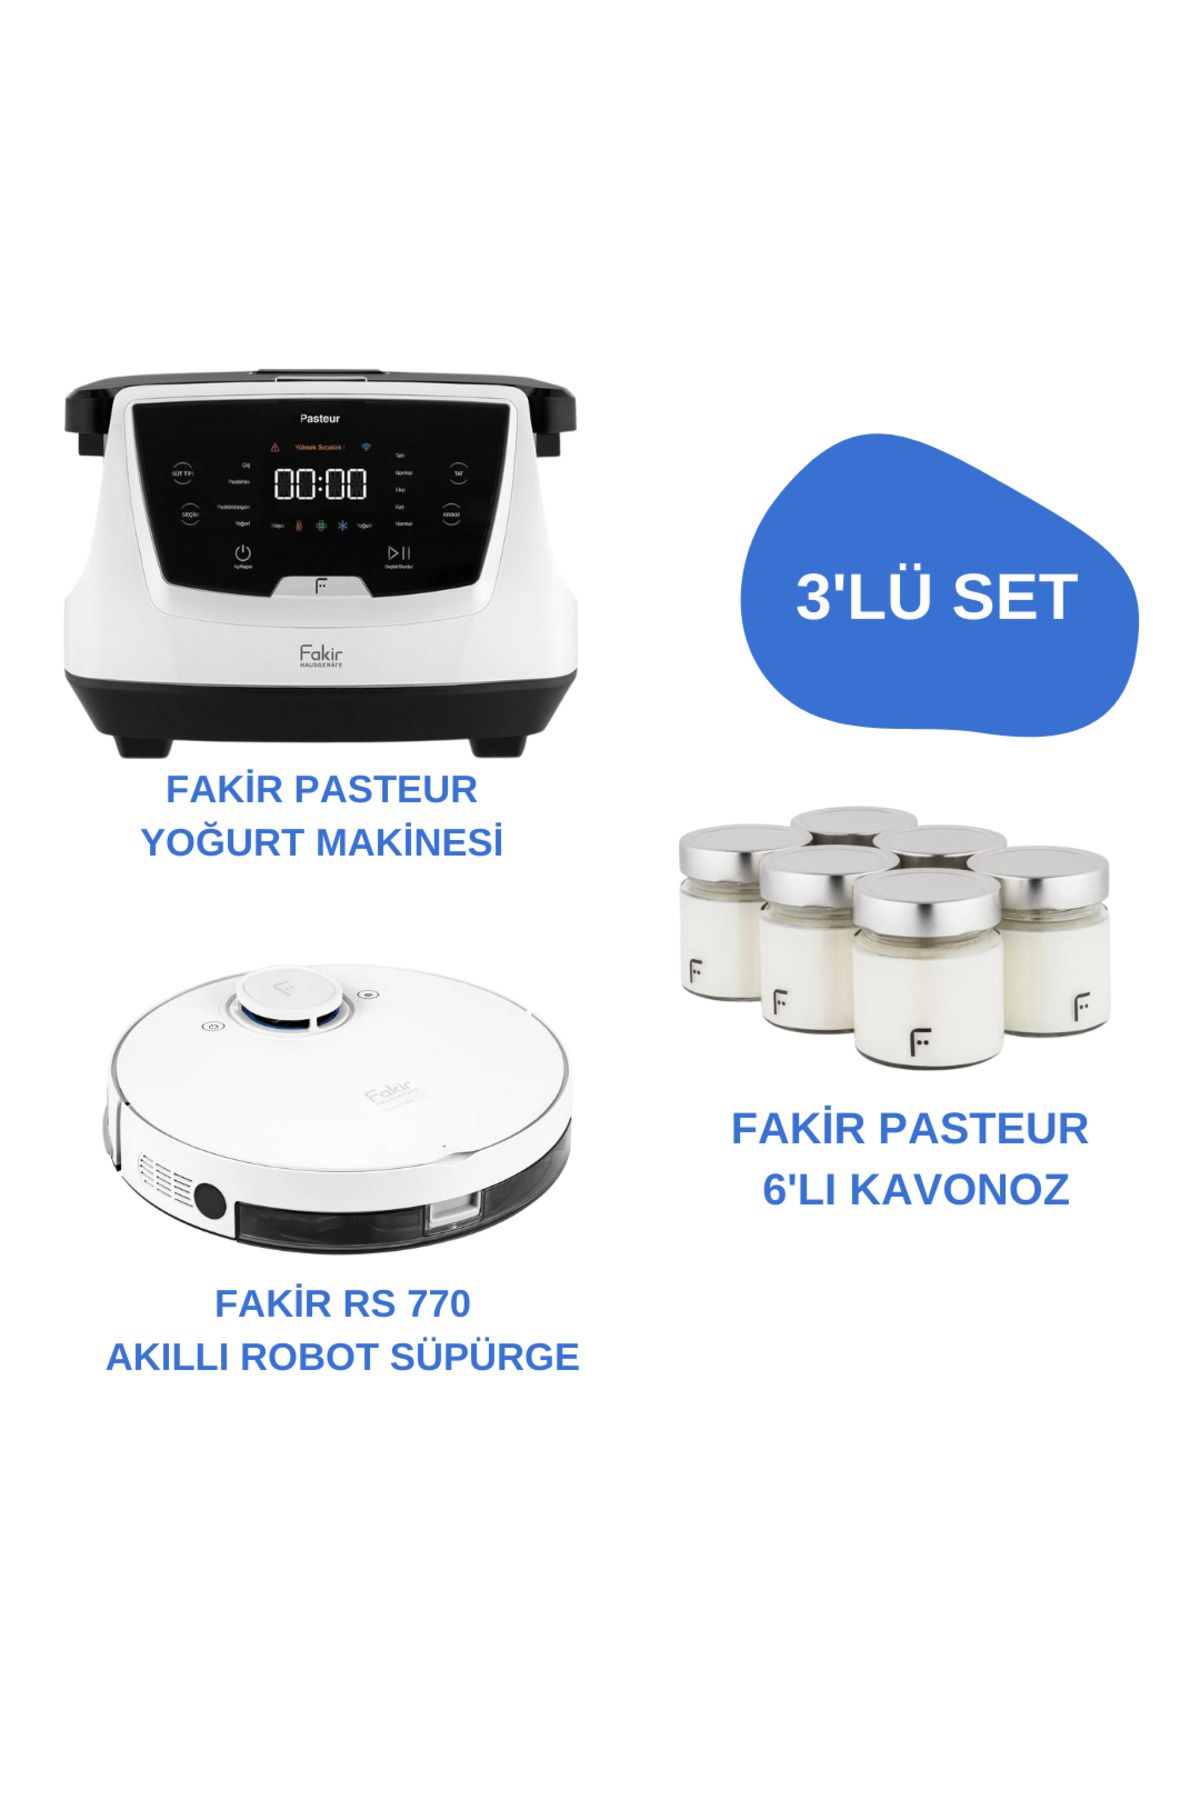 Fakir RS 770 Robot Süpürge, Fakir Pasteur Yoğurt Makinesi, 6'lı Kavanoz Seti